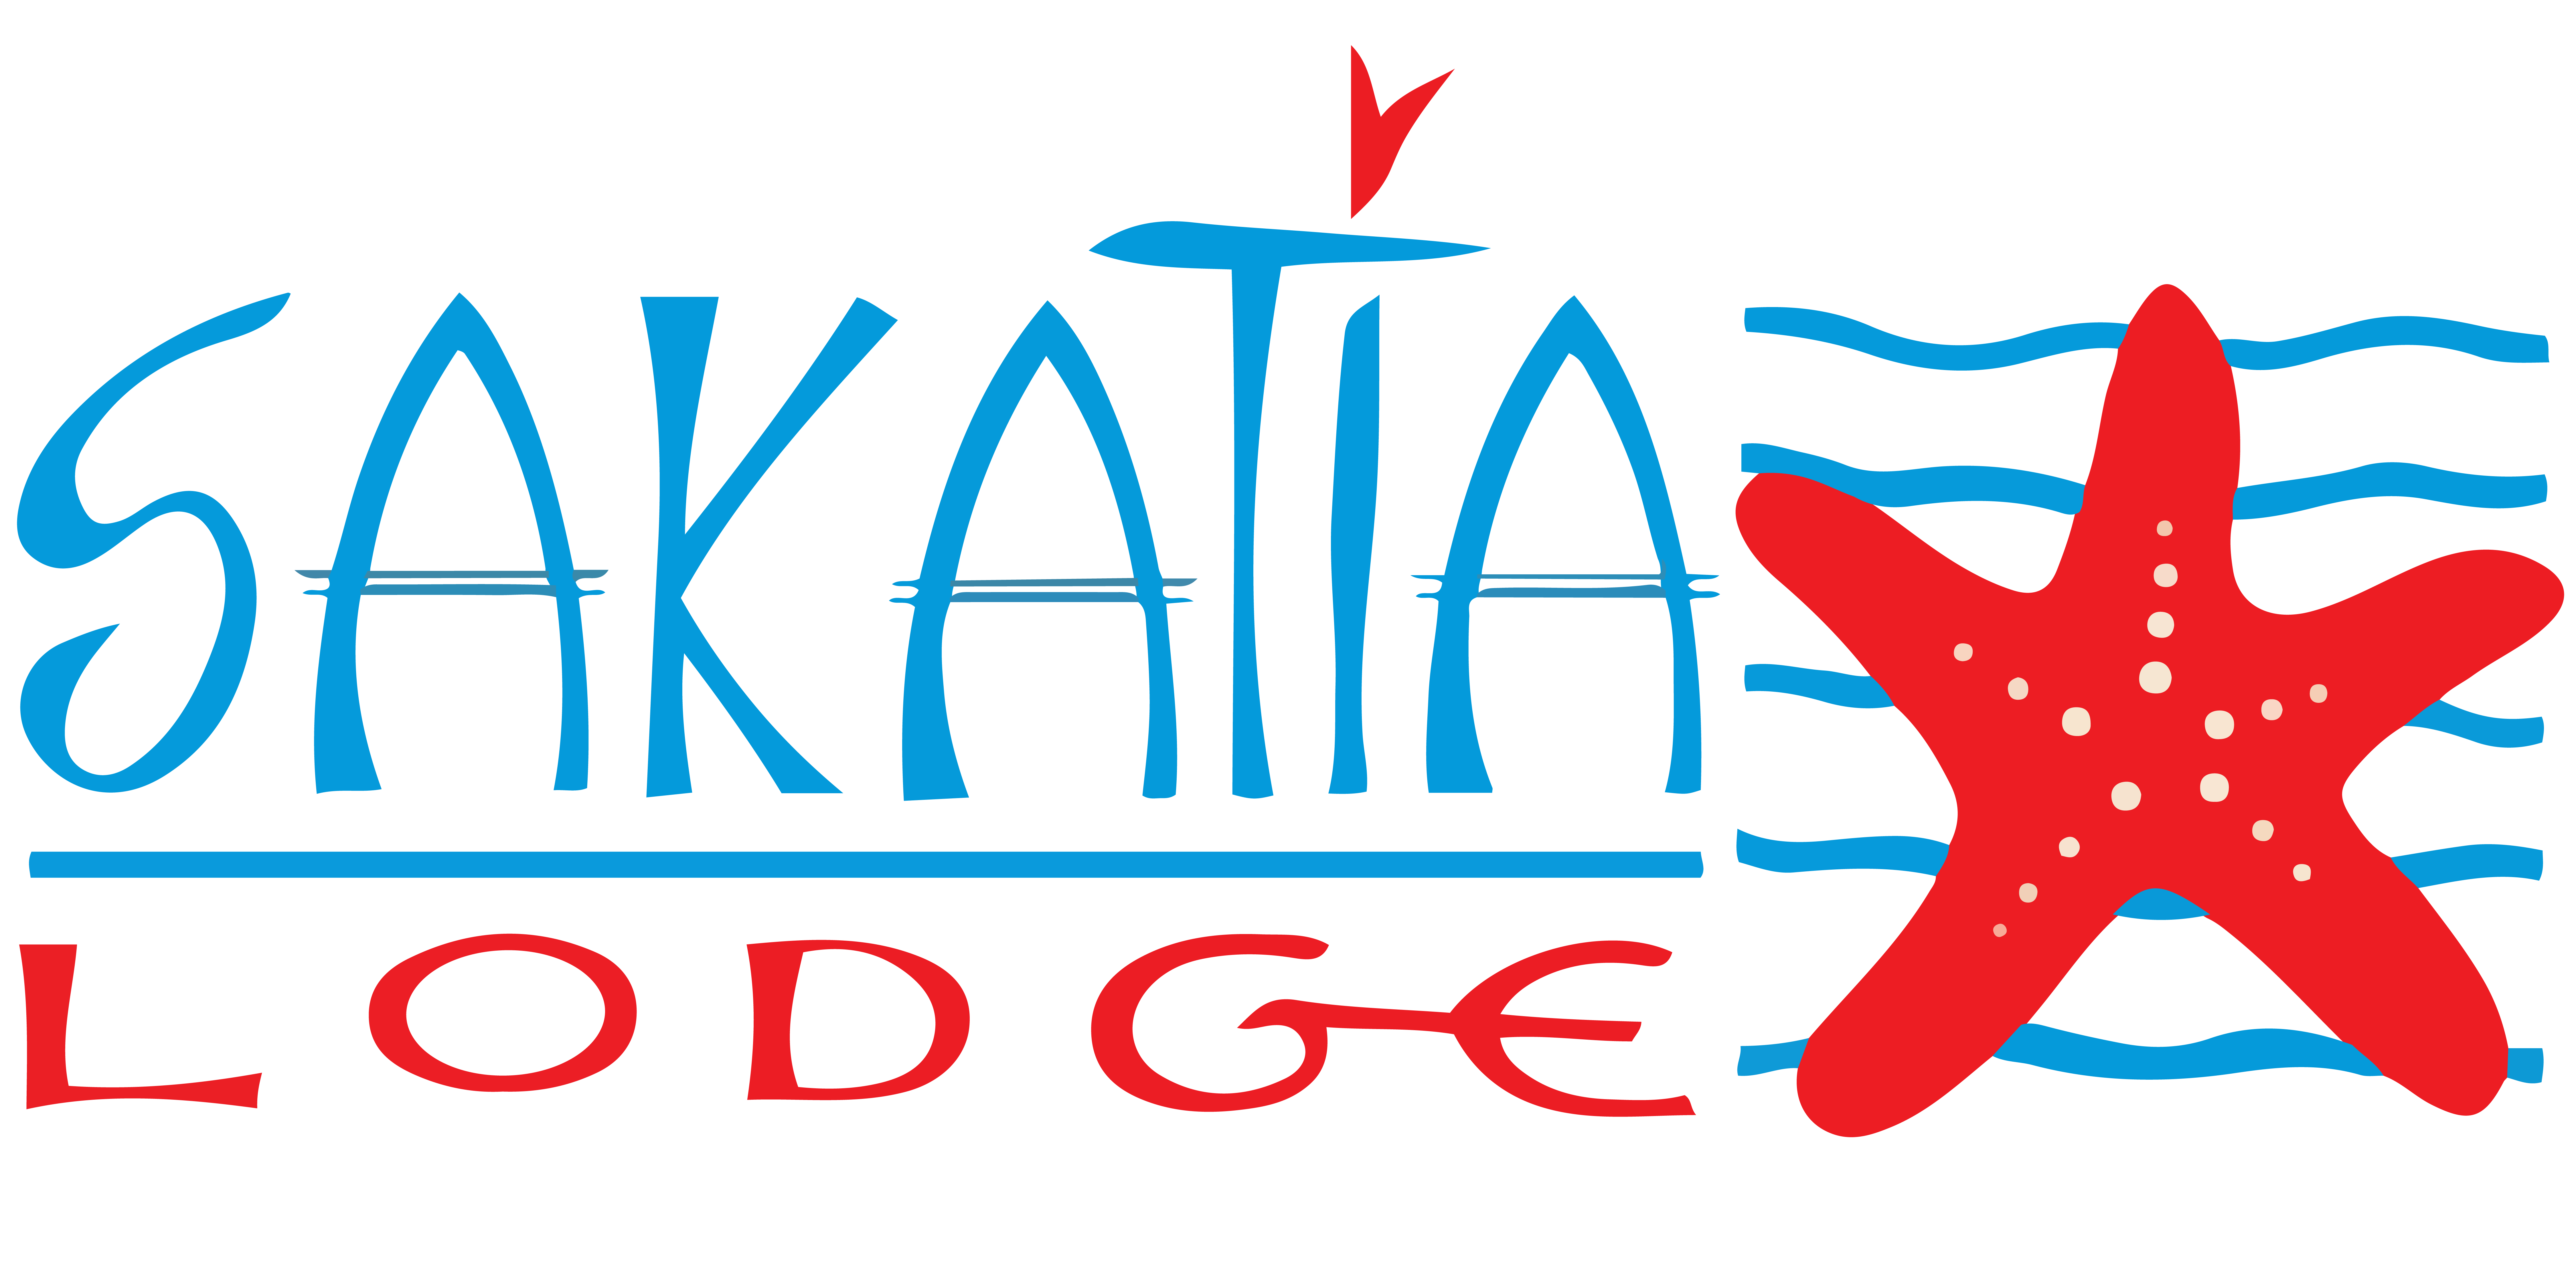 Sakatia Lodge